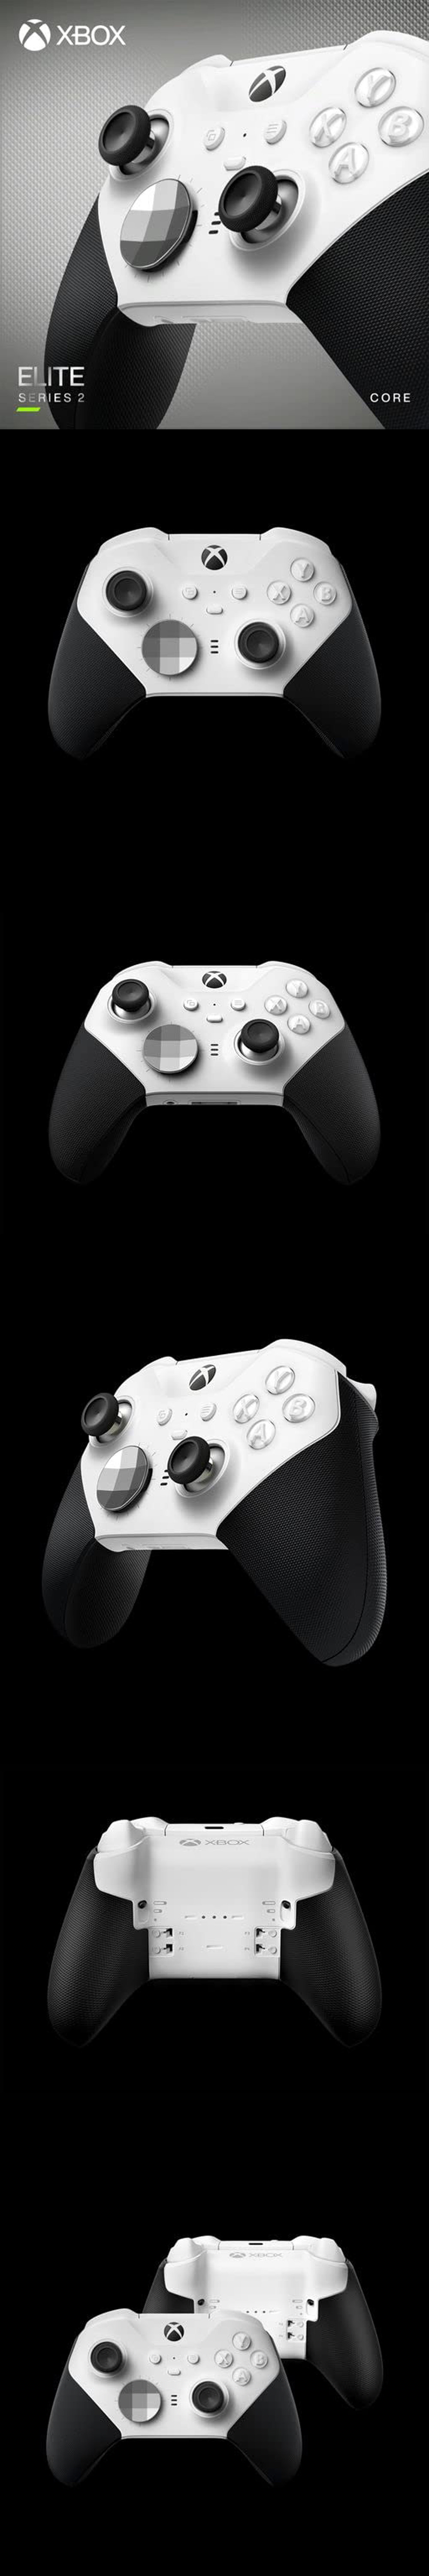 Xbox Elite 無線控制器Series 2 - Core（白色）《台灣公司貨